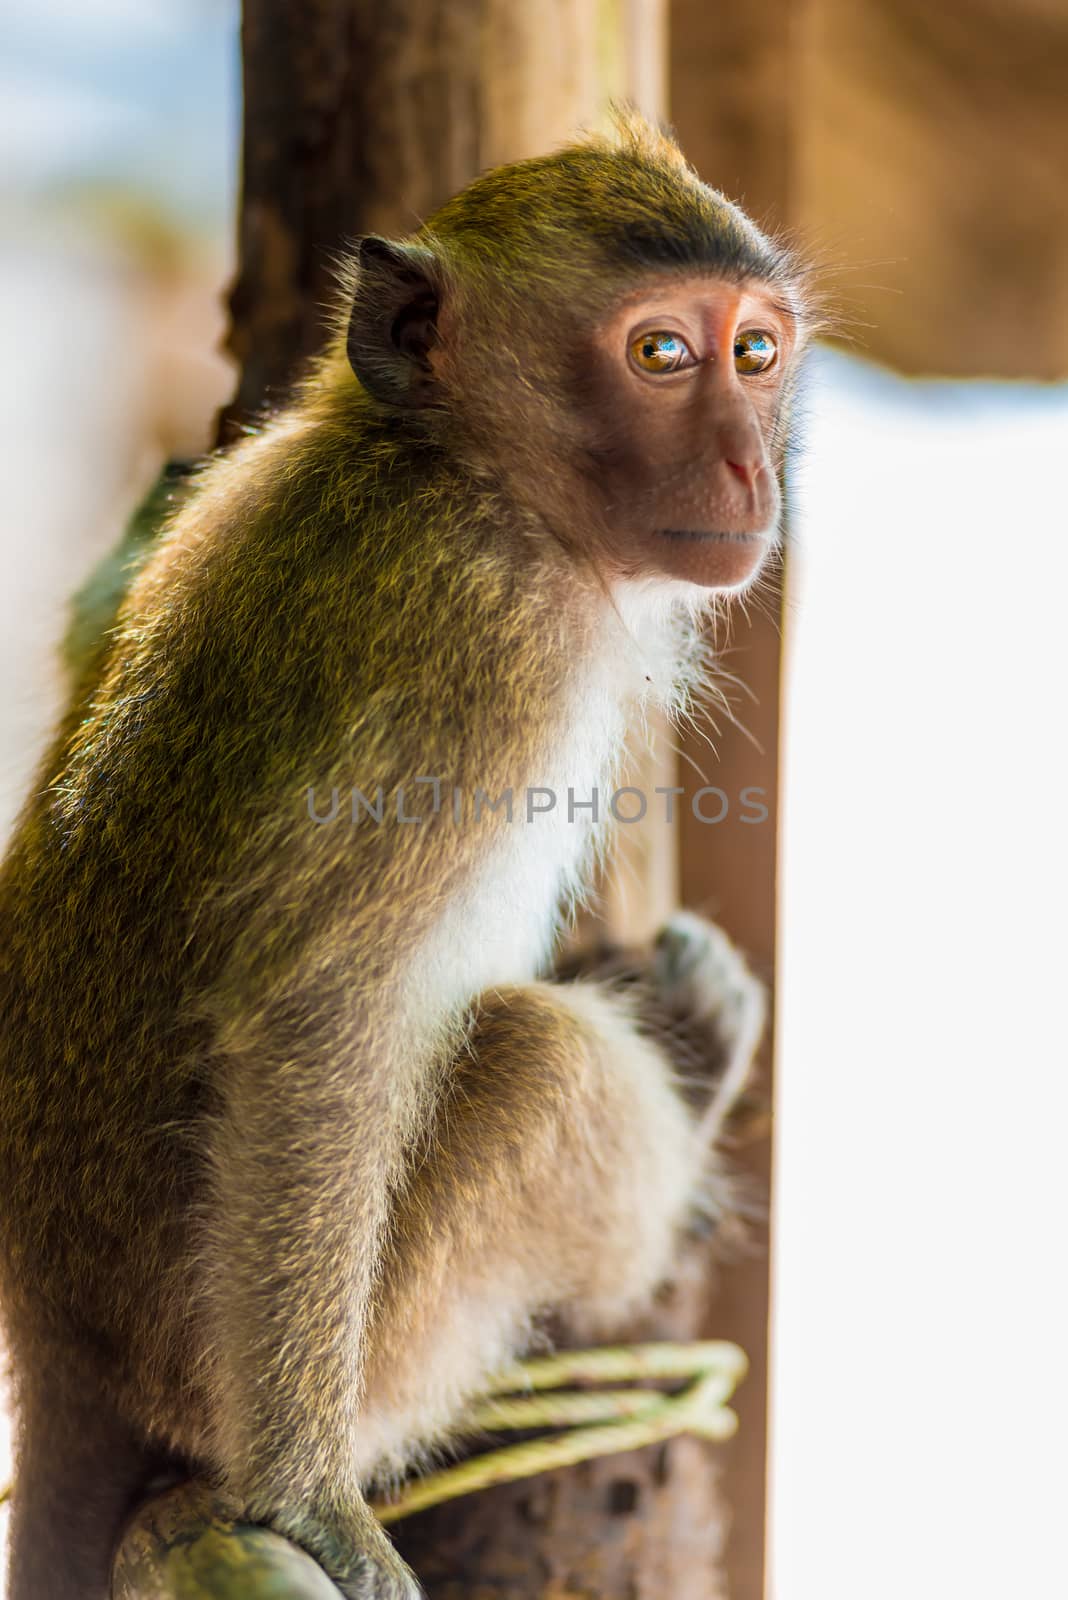 vertical portrait of a monkey in a natural habitat